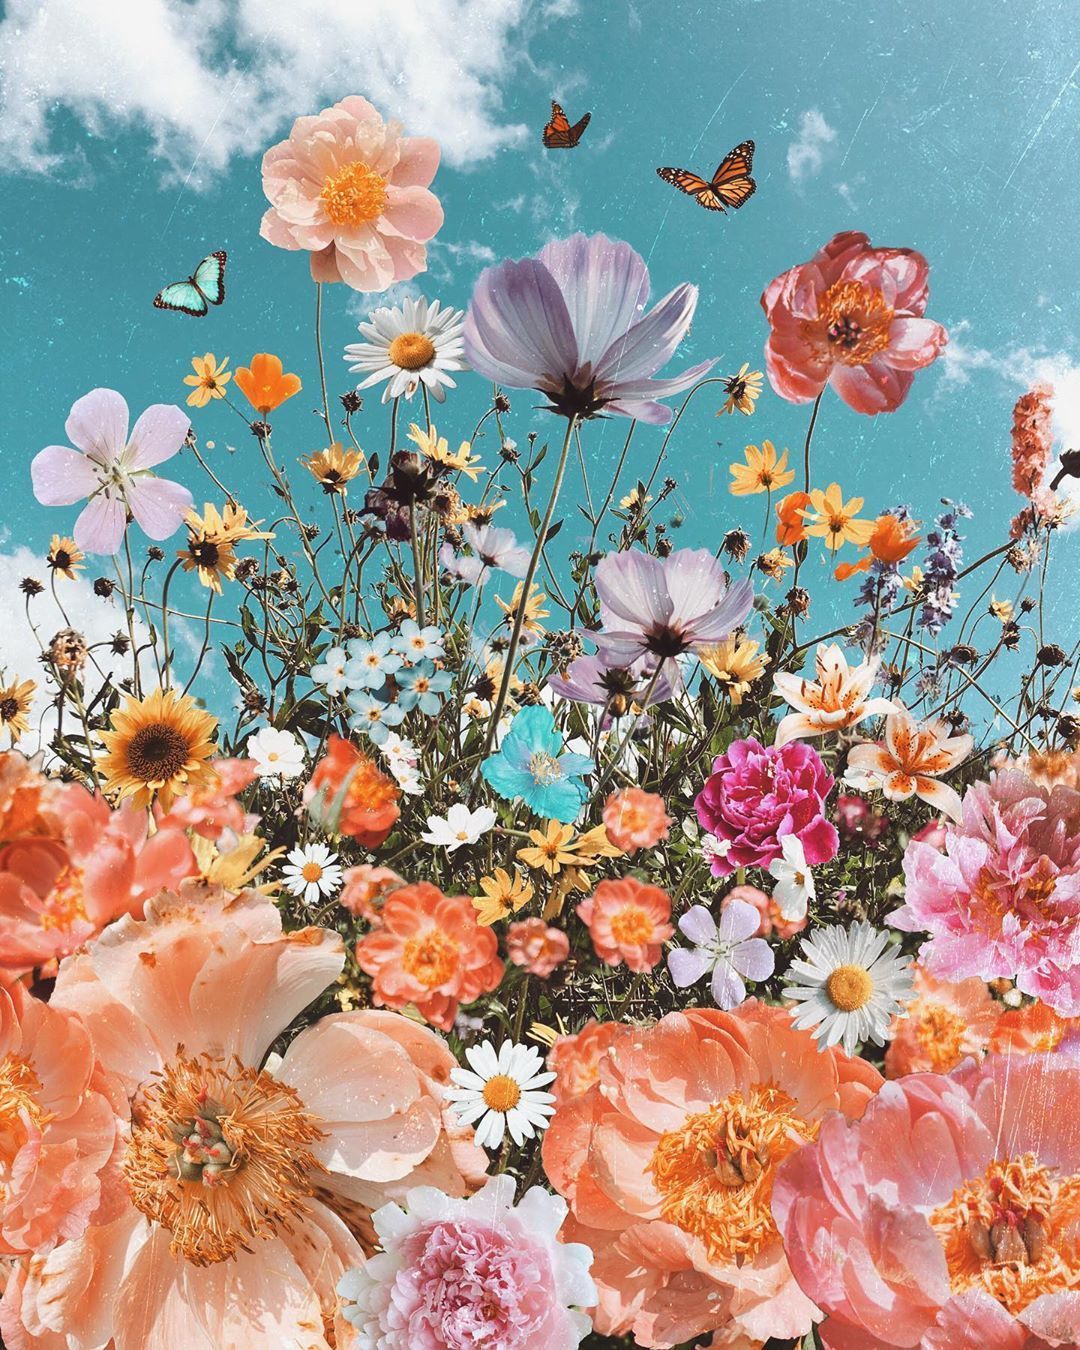 odwyer_sio9. Flower wallpaper, iPhone wallpaper vsco, Nature